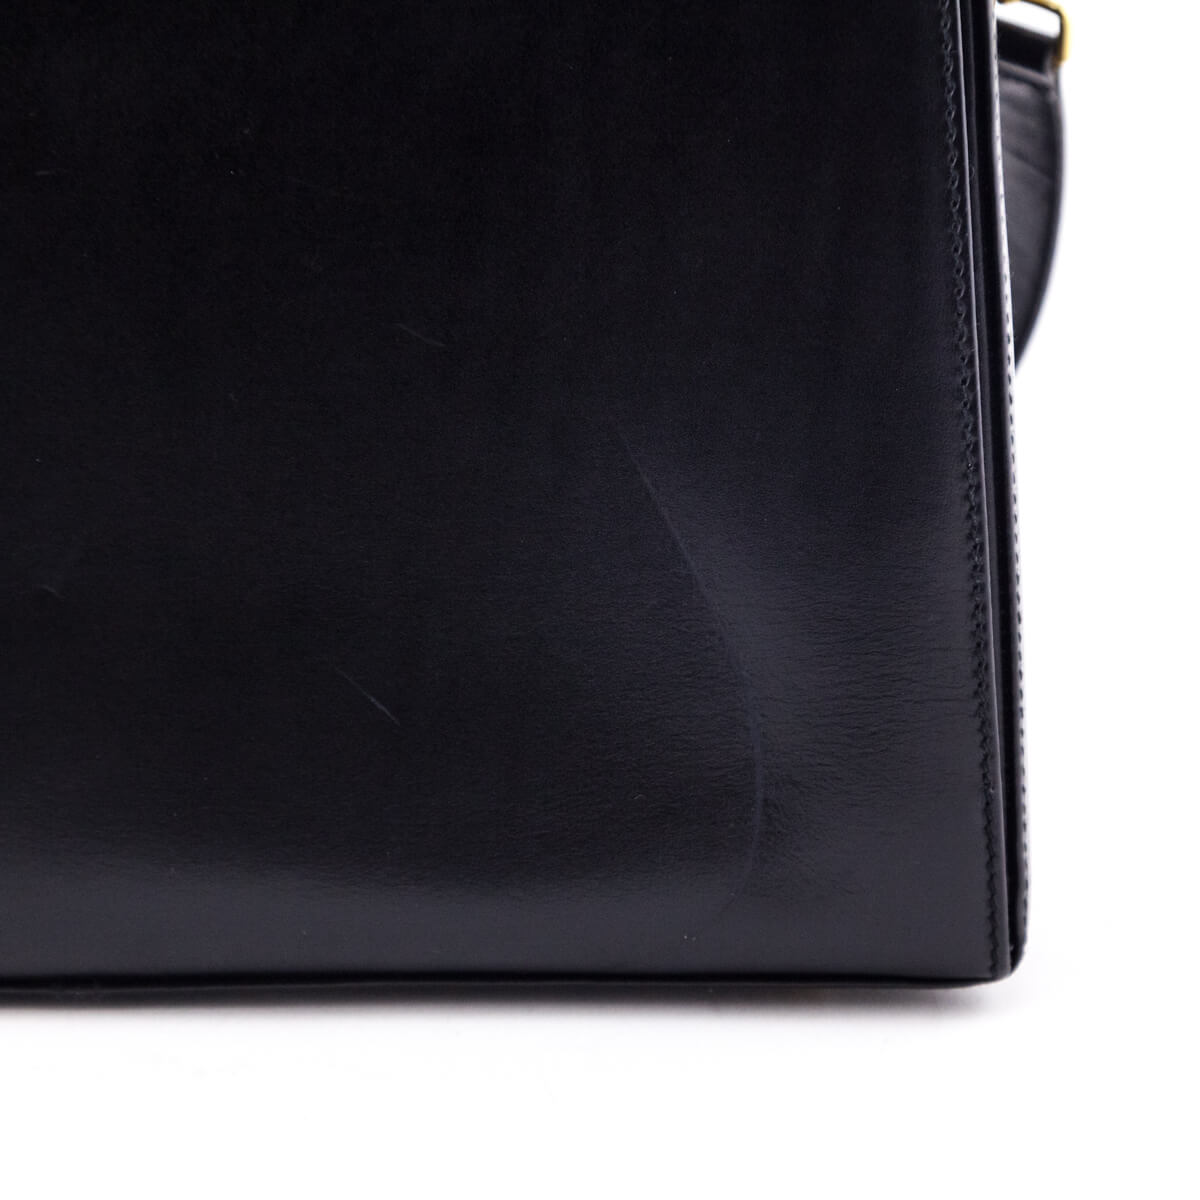 Ferragamo Black Smooth Calfskin Gancini Top Handle Bag - Love that Bag etc - Preowned Authentic Designer Handbags & Preloved Fashions